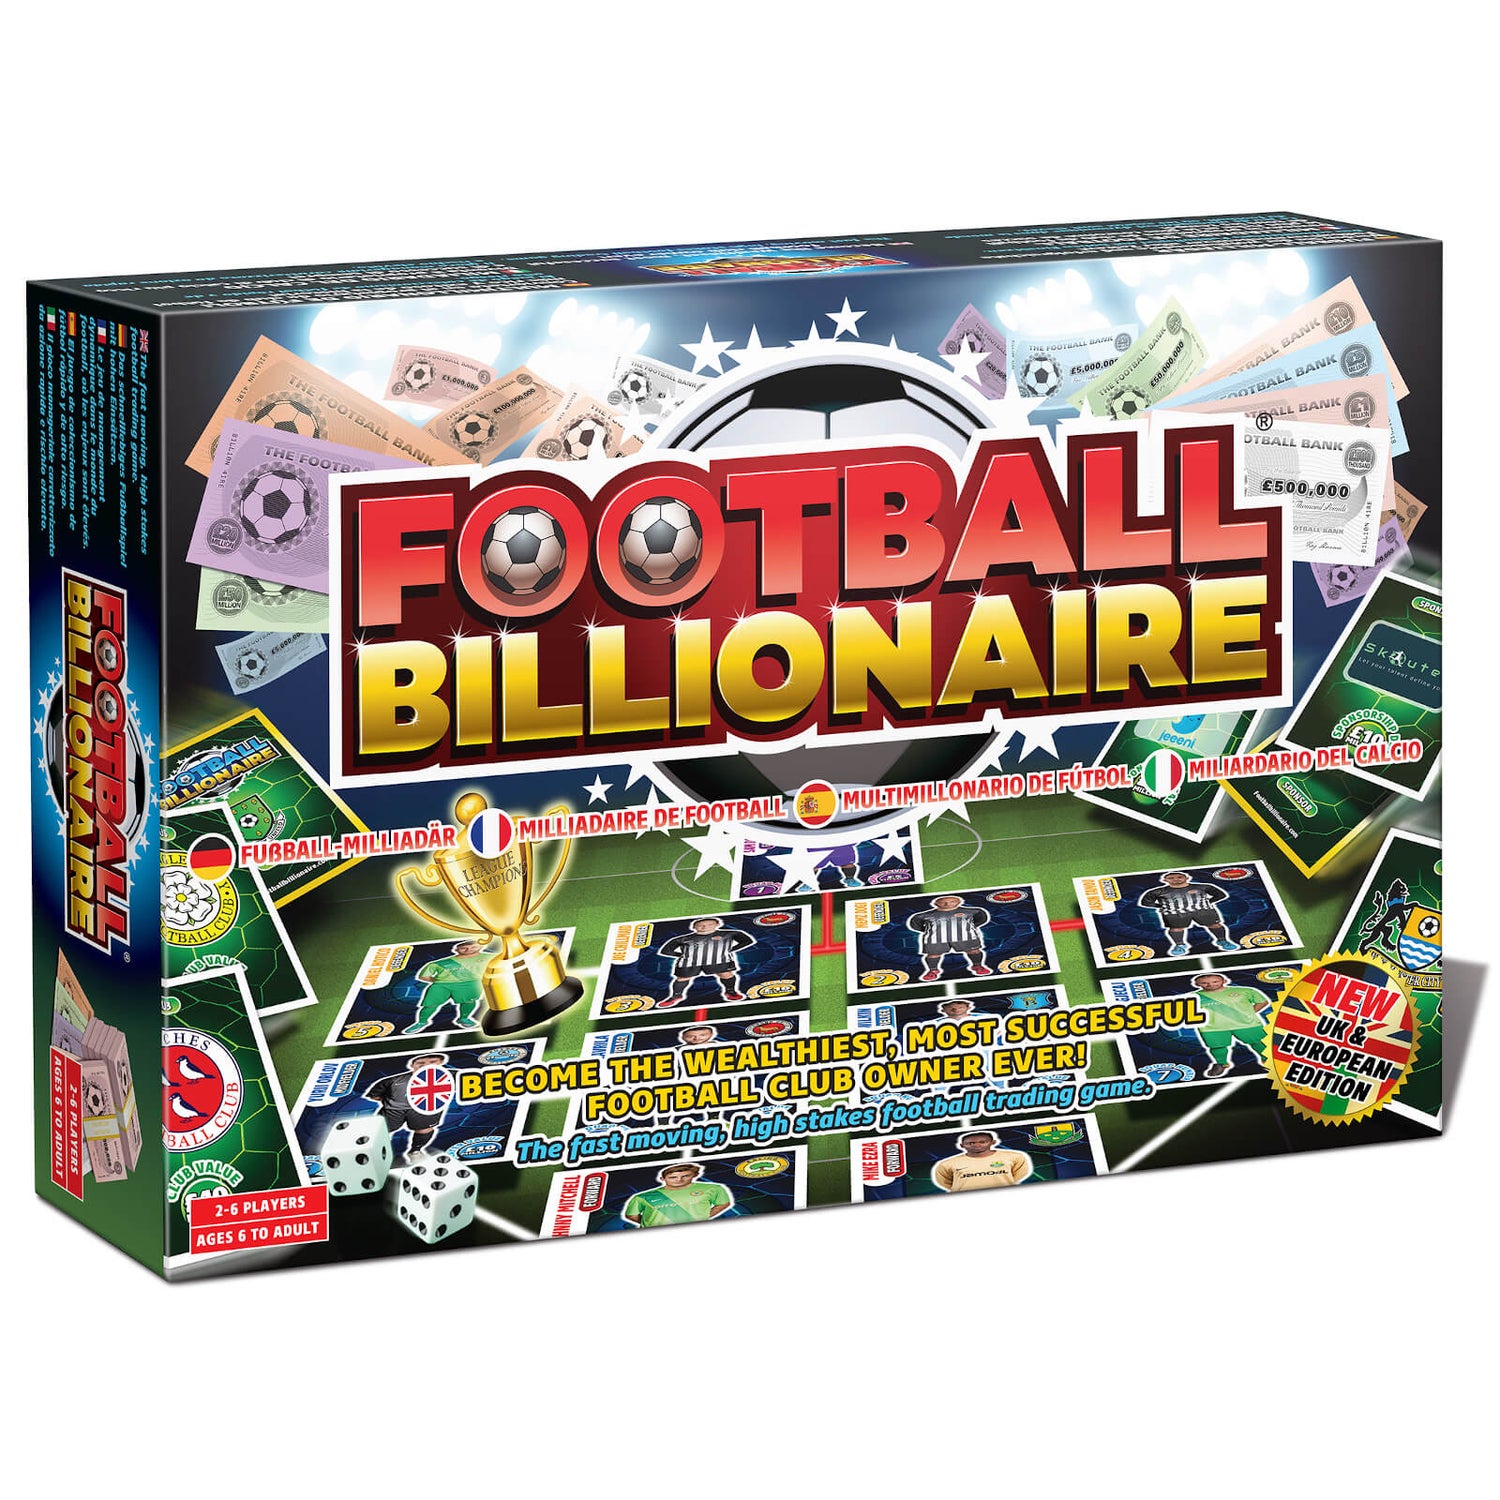 Football Billionaire - Match Day Edition